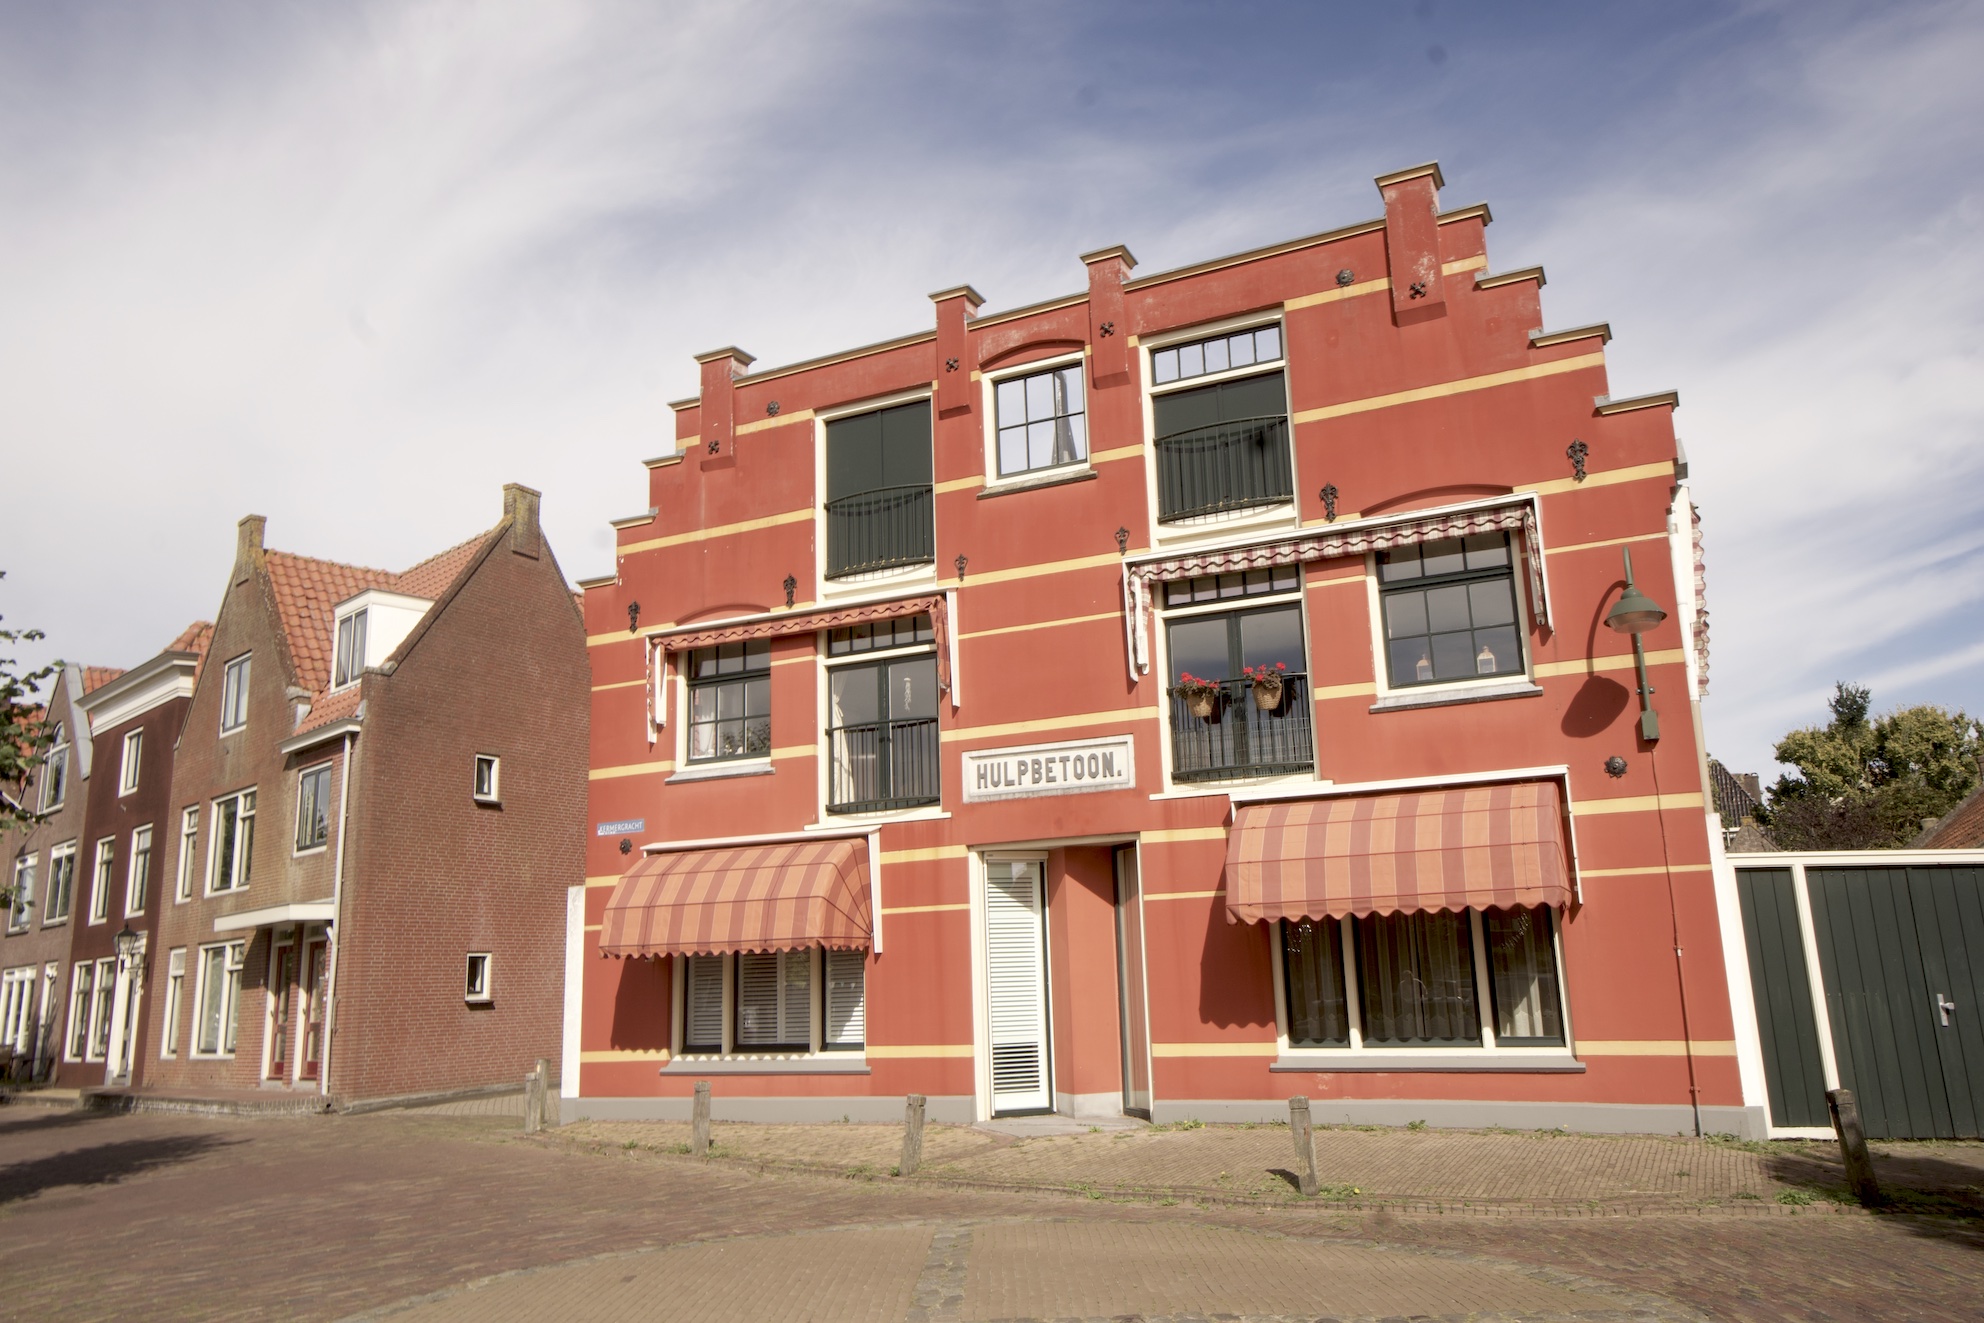 Orange house in the Krim street in Monnickendam